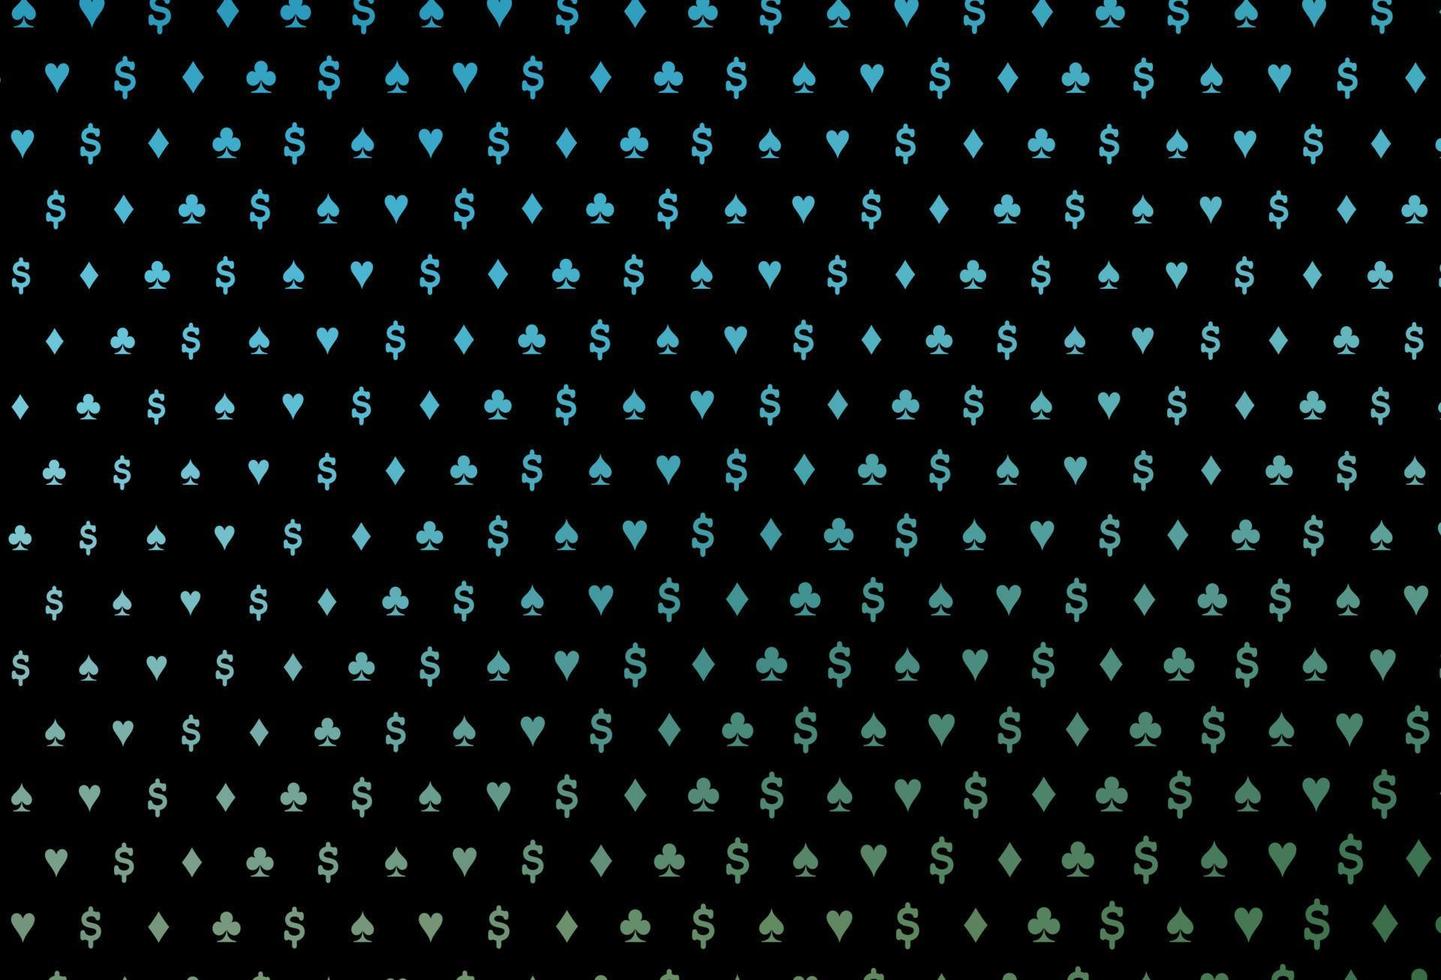 dunkelblaue Vektorvorlage mit Pokersymbolen. vektor